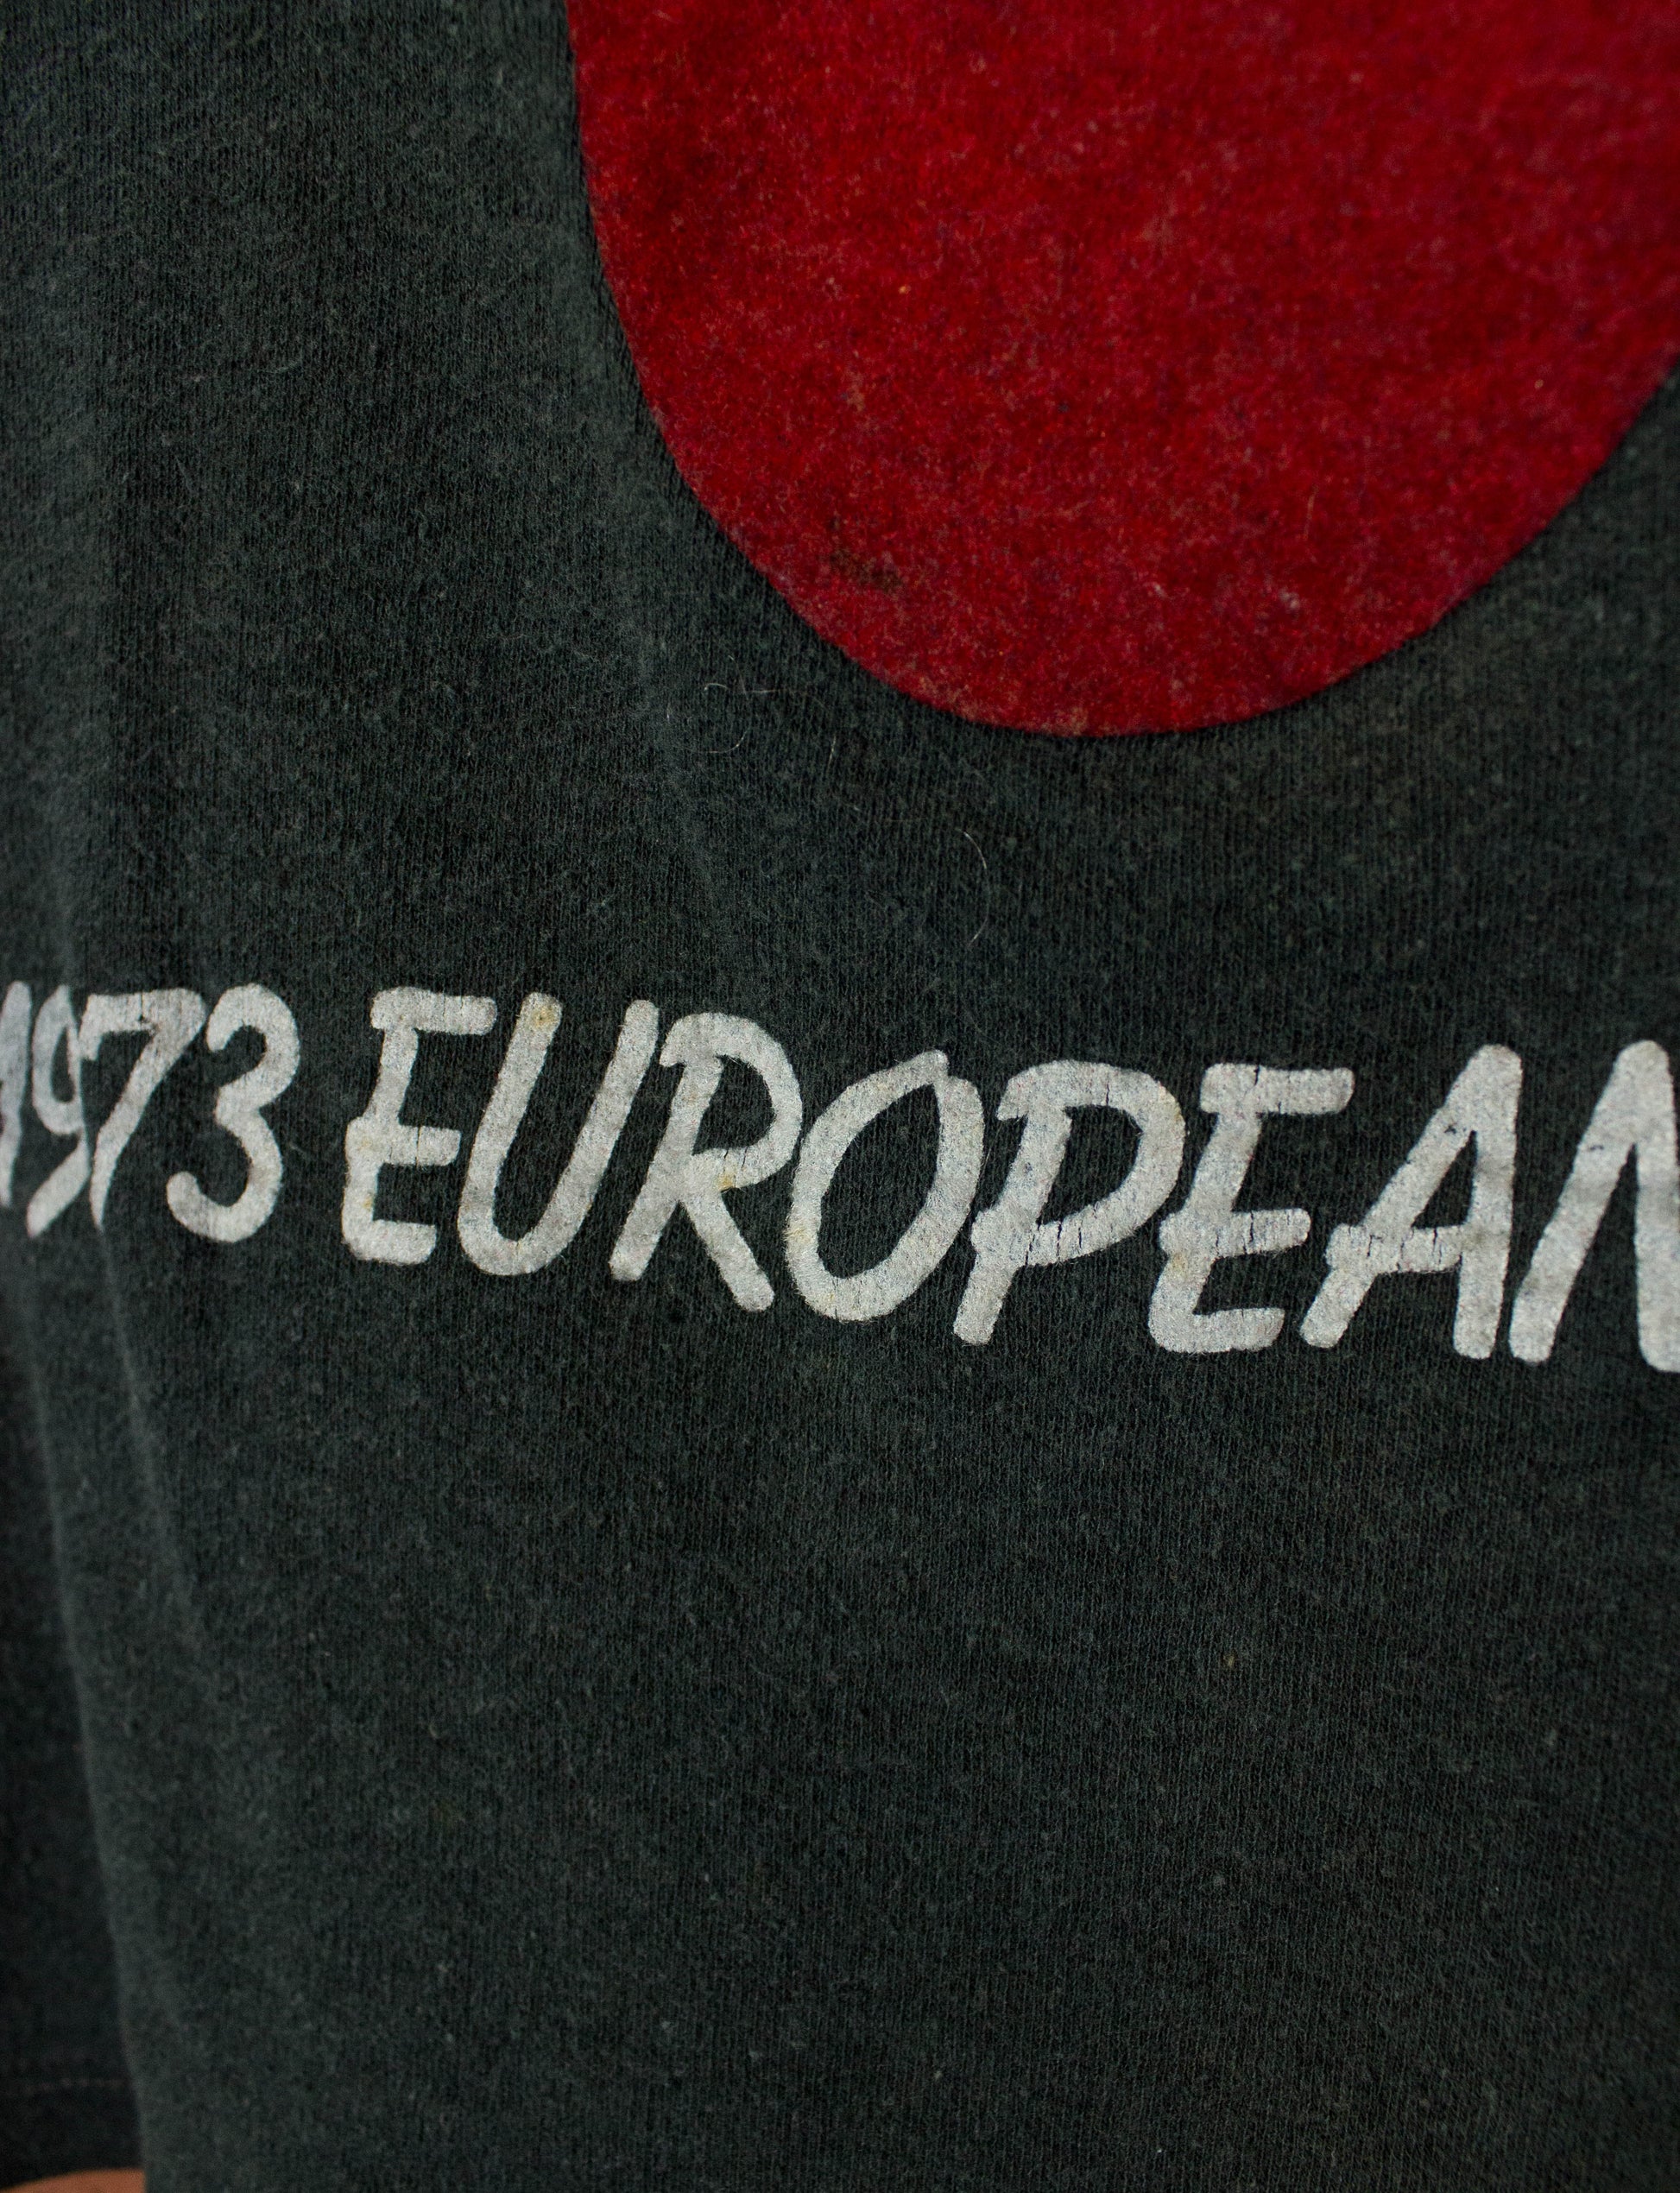 The Rolling Stones 1973 European Tour Women's Black Concert T Shirt Size Small